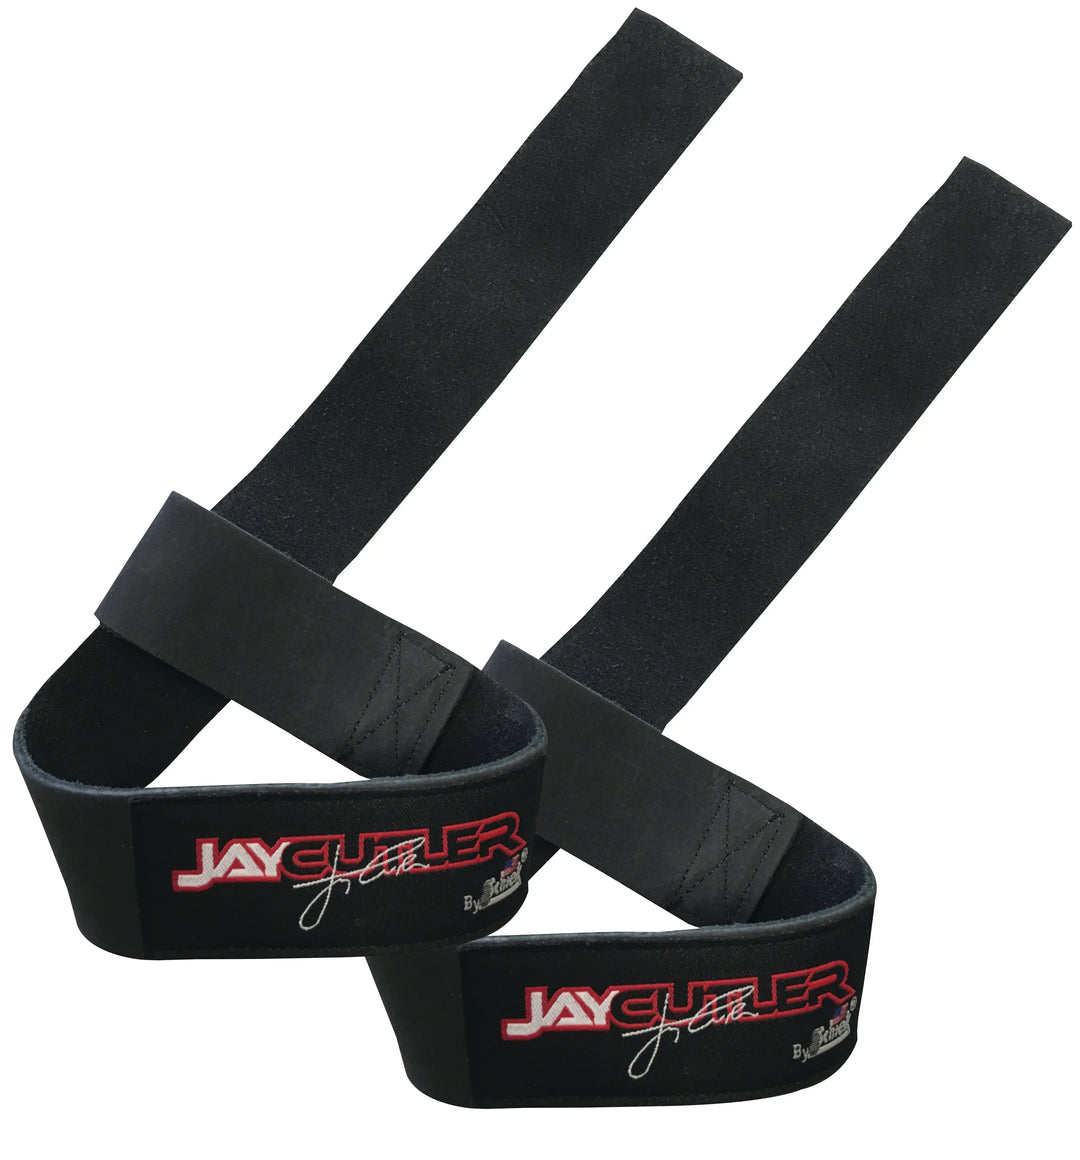 Model J-1000LLS Jay Cutler Signature Leather Lifting Straps Schiek Sports